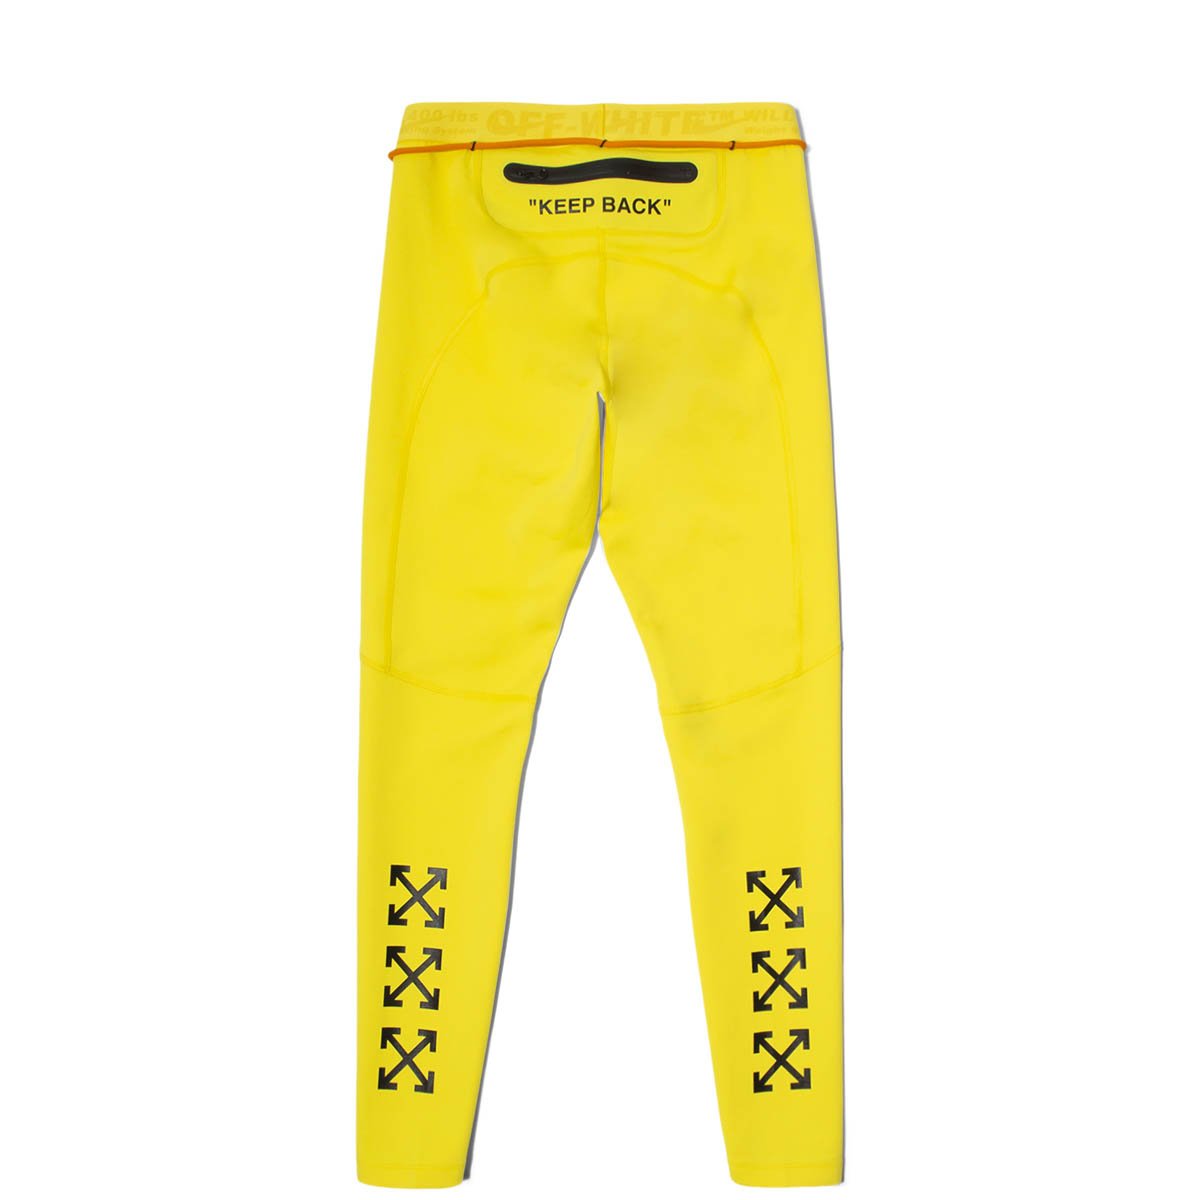 off white x nike yellow leggings